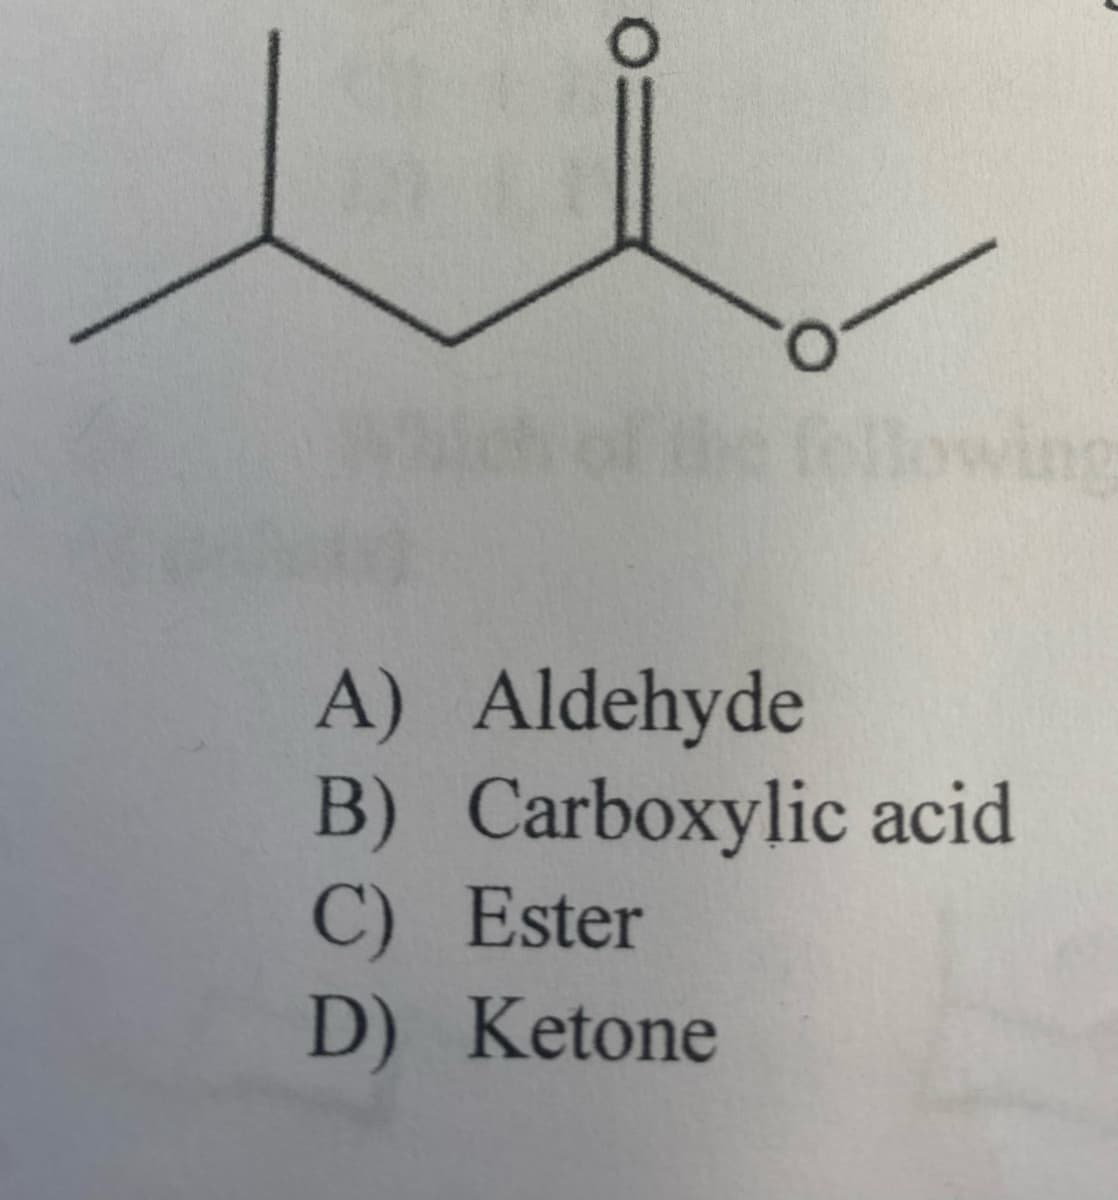 A) Aldehyde
B) Carboxylic acid
C) Ester
D) Ketone